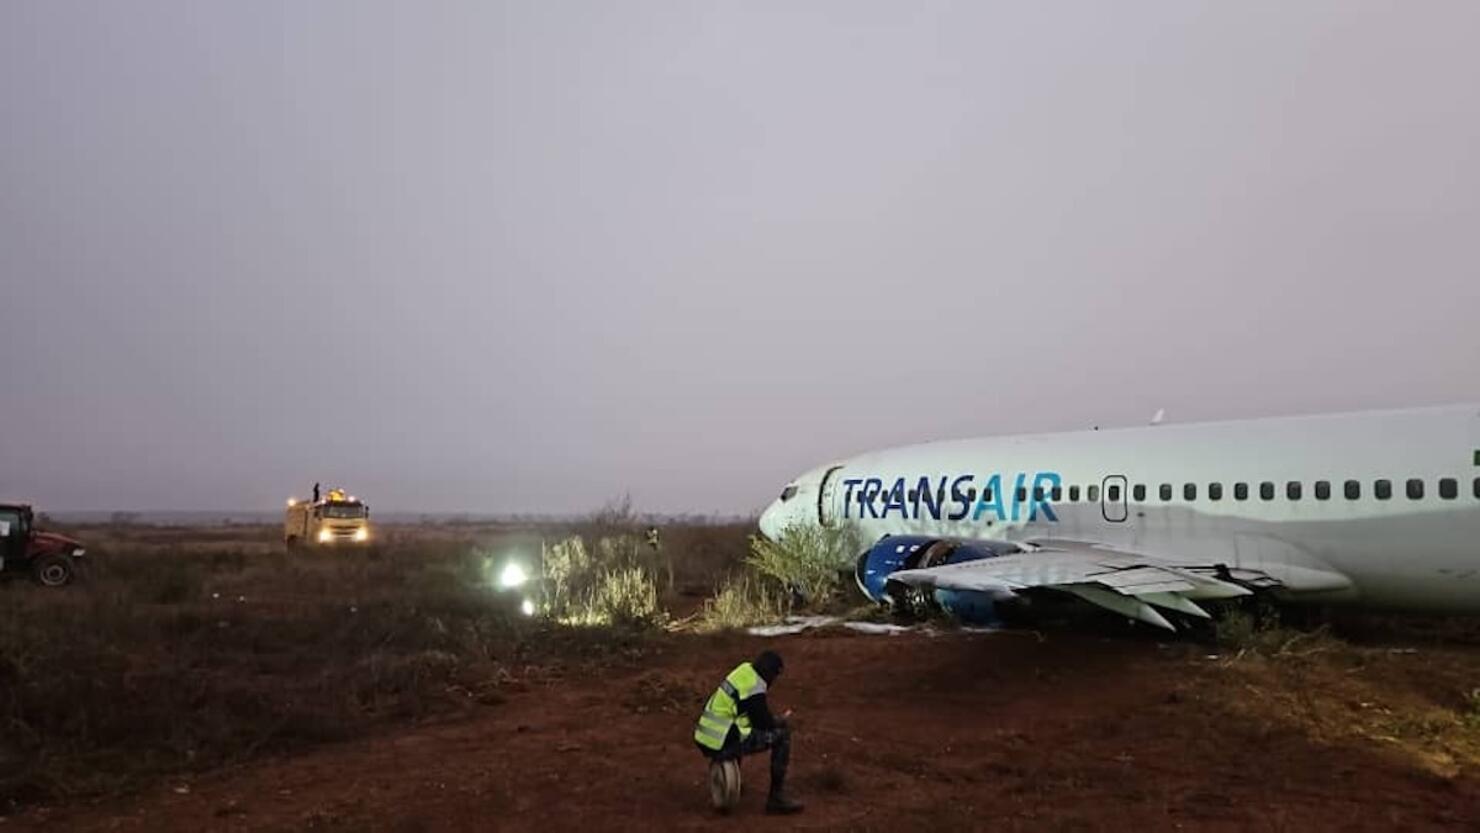 Boeing 737 skids off runway at airport in Senegal